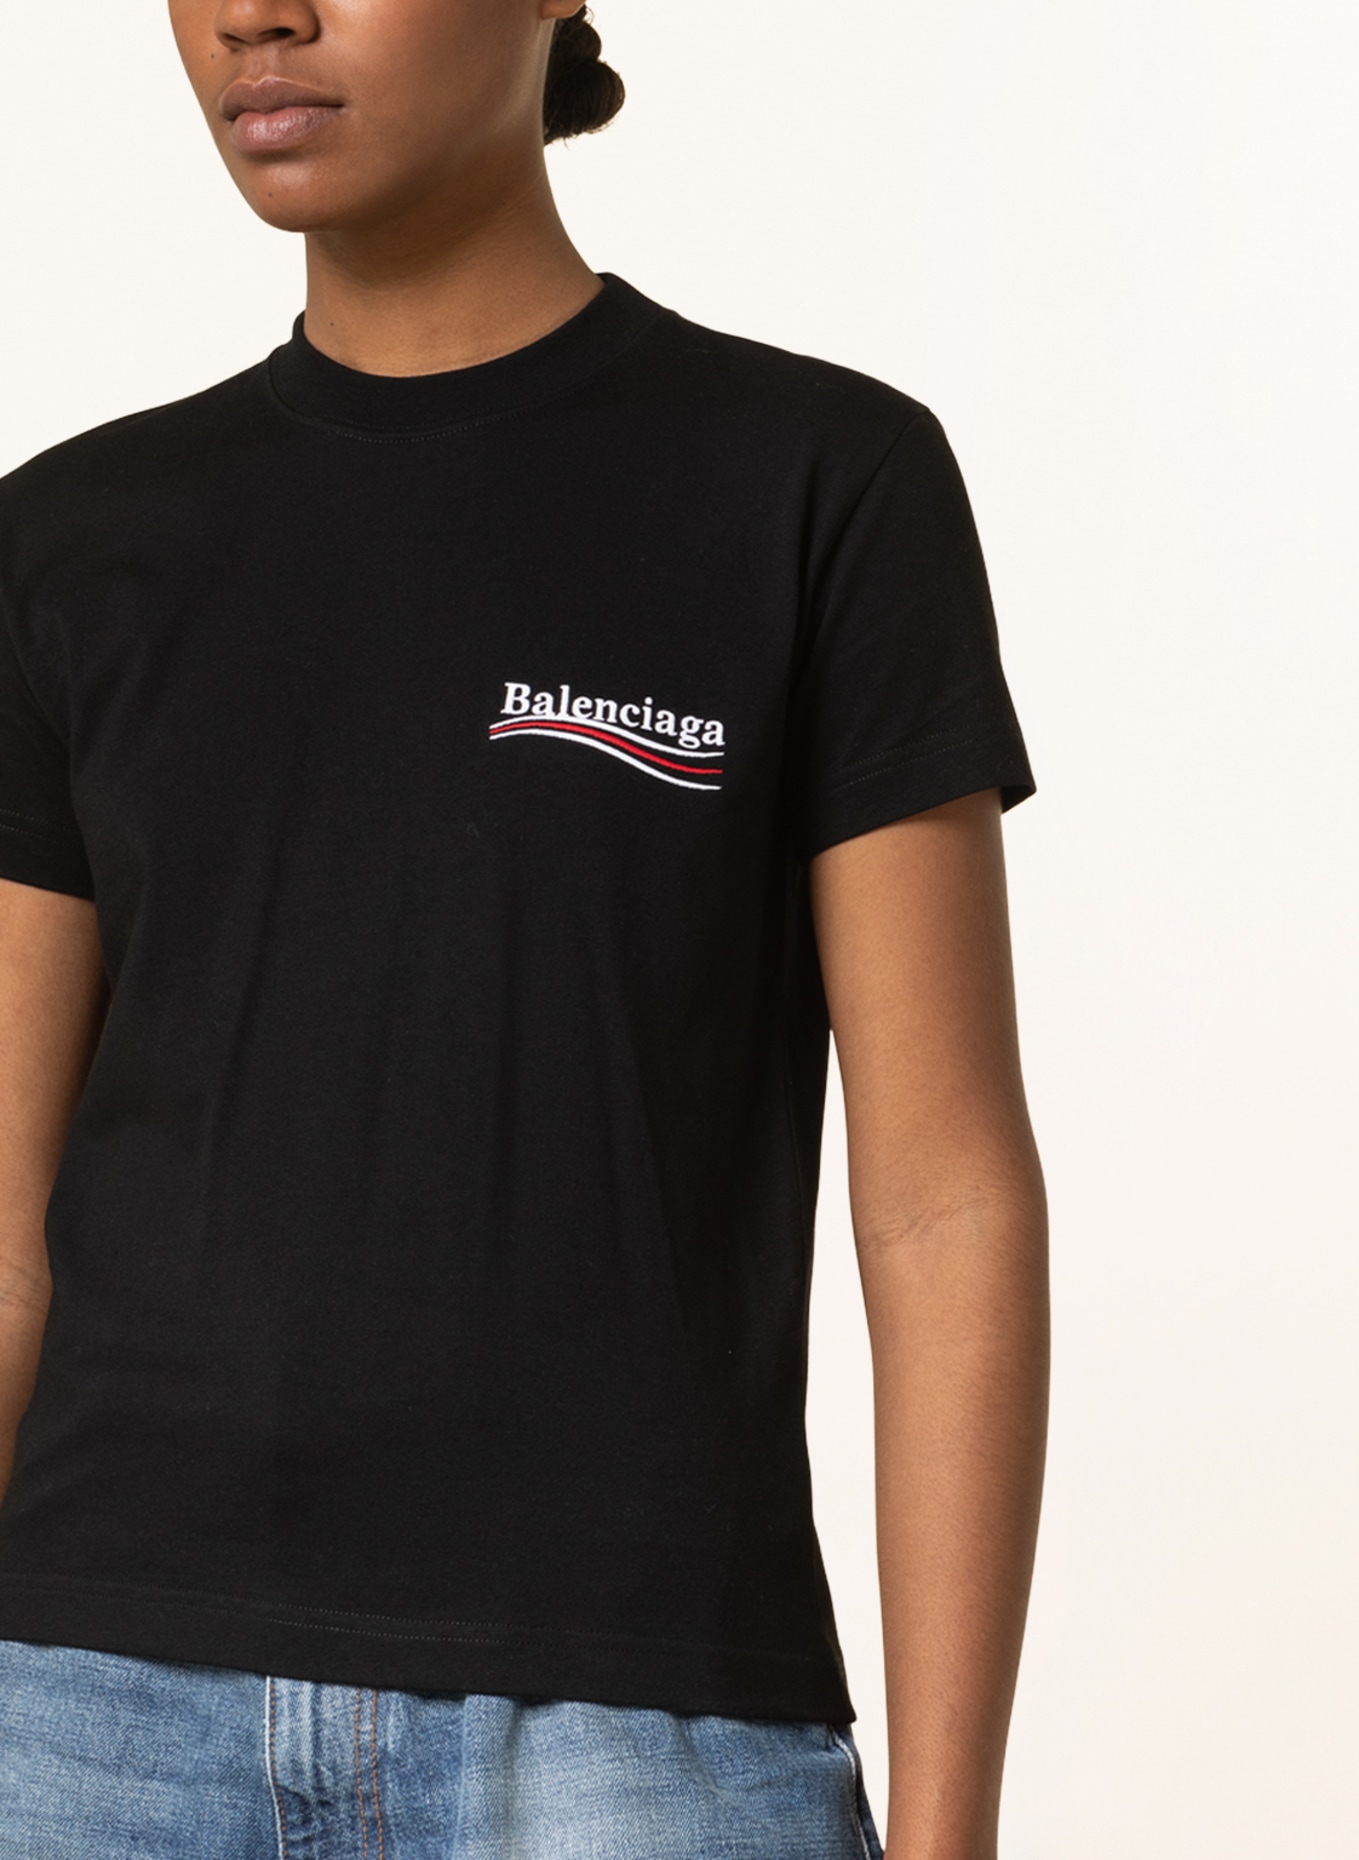 Tshirt Balenciaga Black size L International in Cotton  25547506